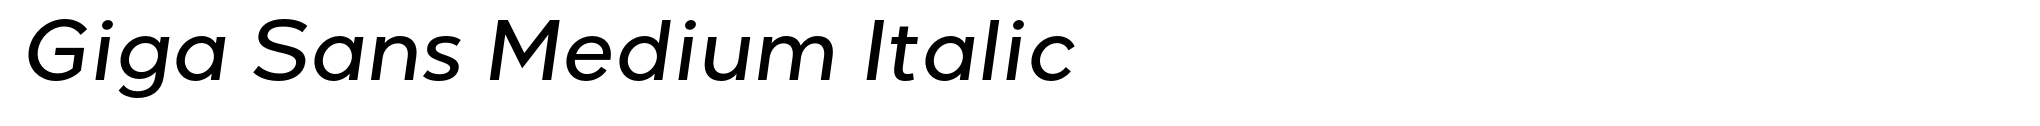 Giga Sans Medium Italic image